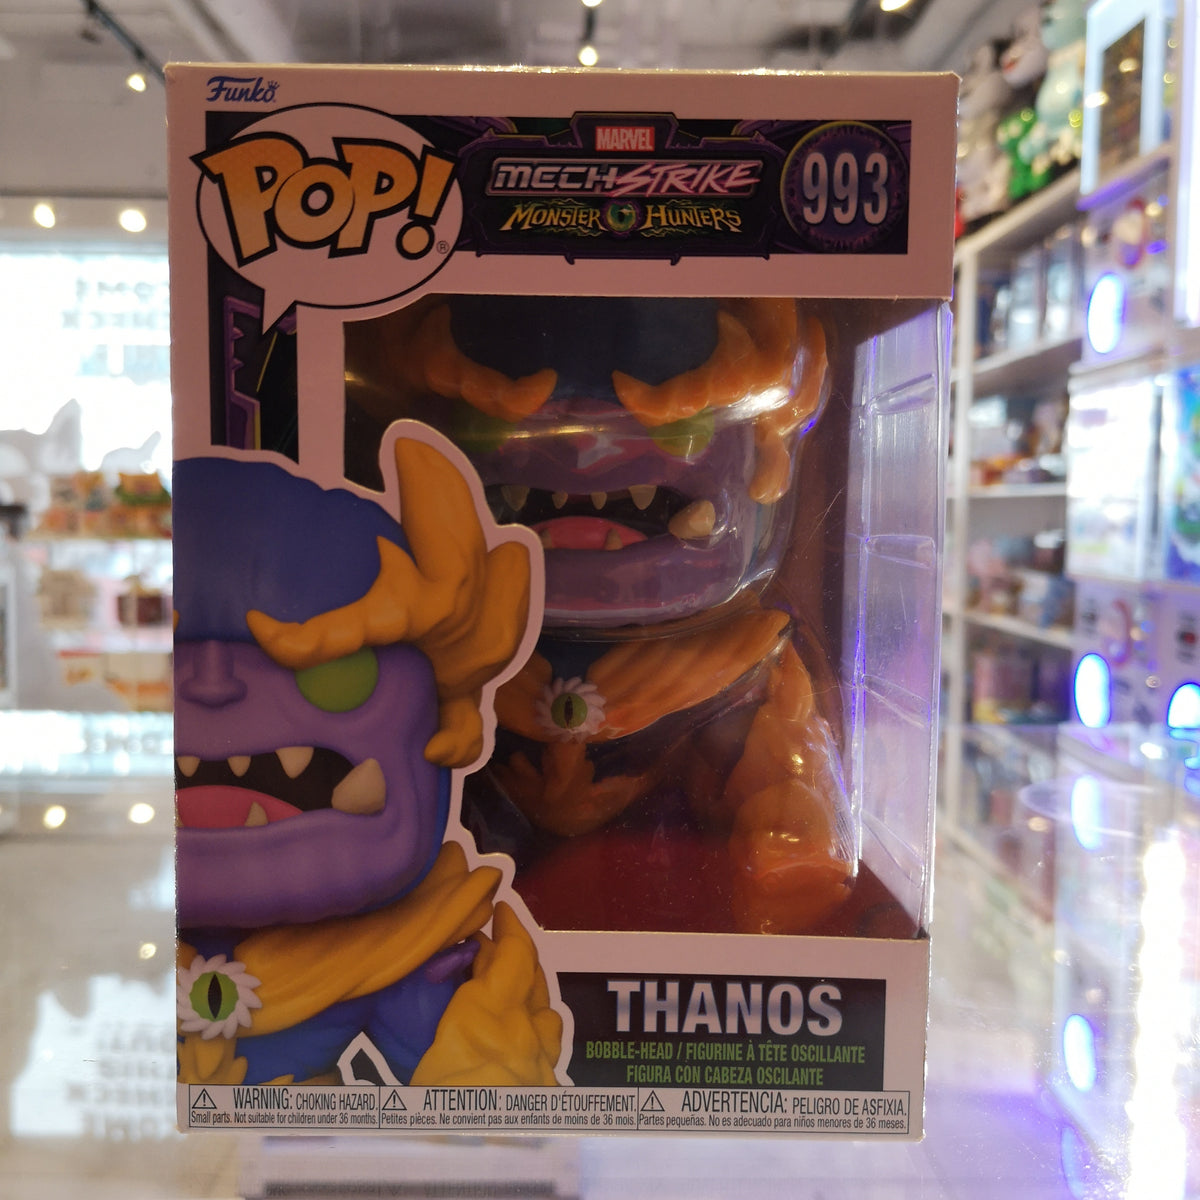 Thanos - MechStrike Monster Hunters Funko POP! by Funko